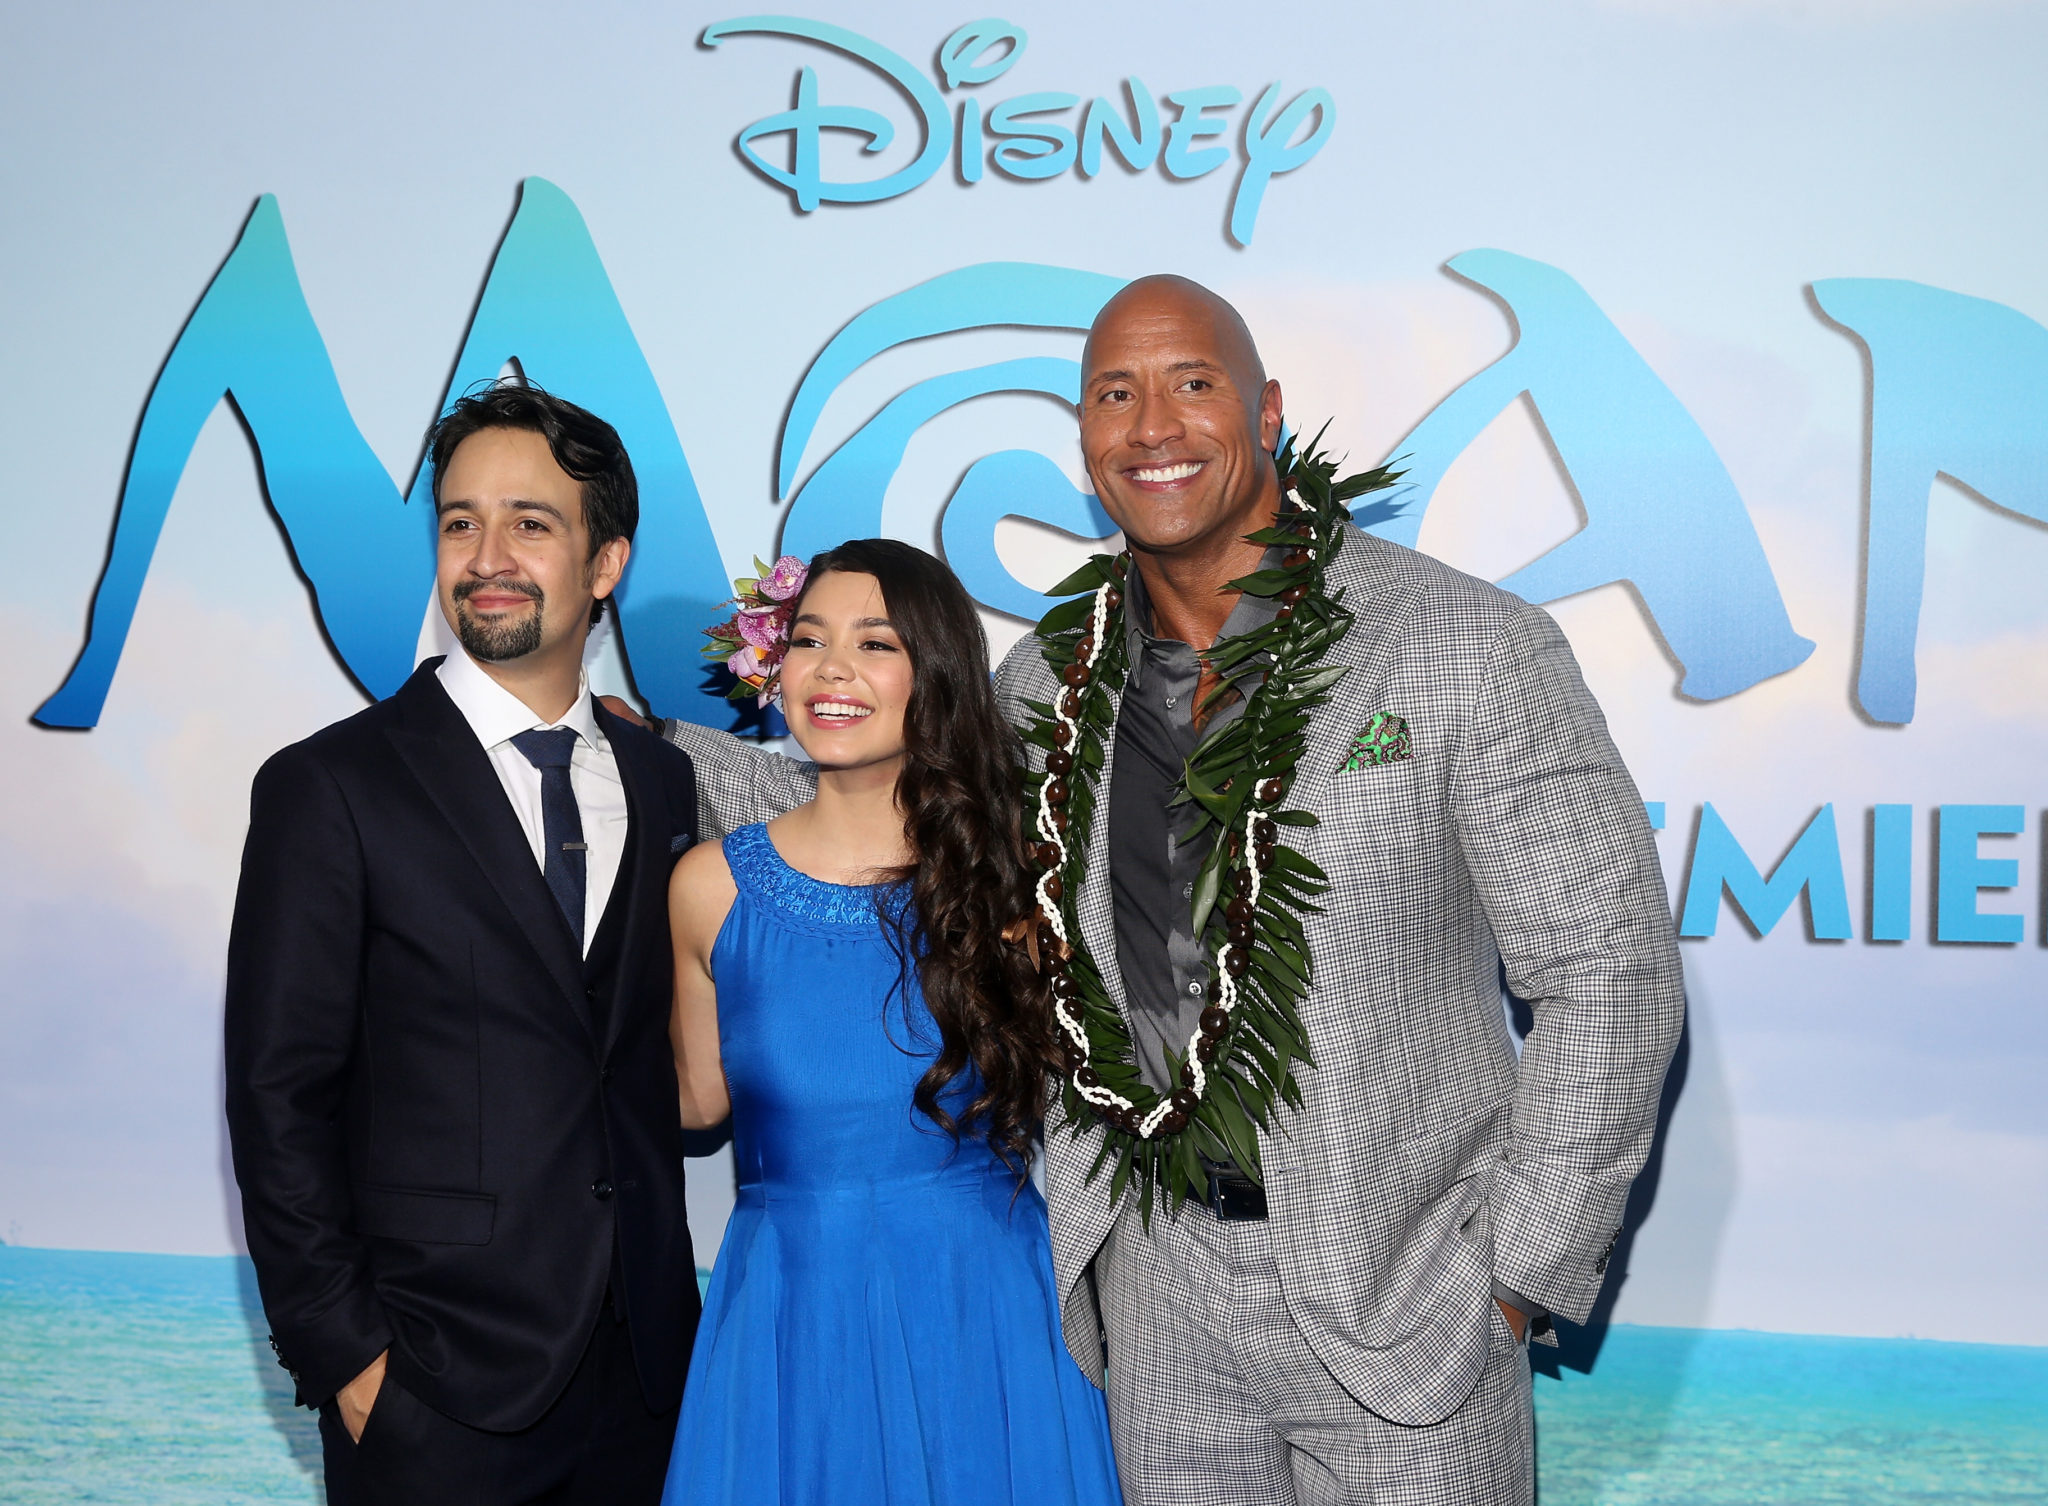 Disney’s “Moana” Blue Carpet World Premiere